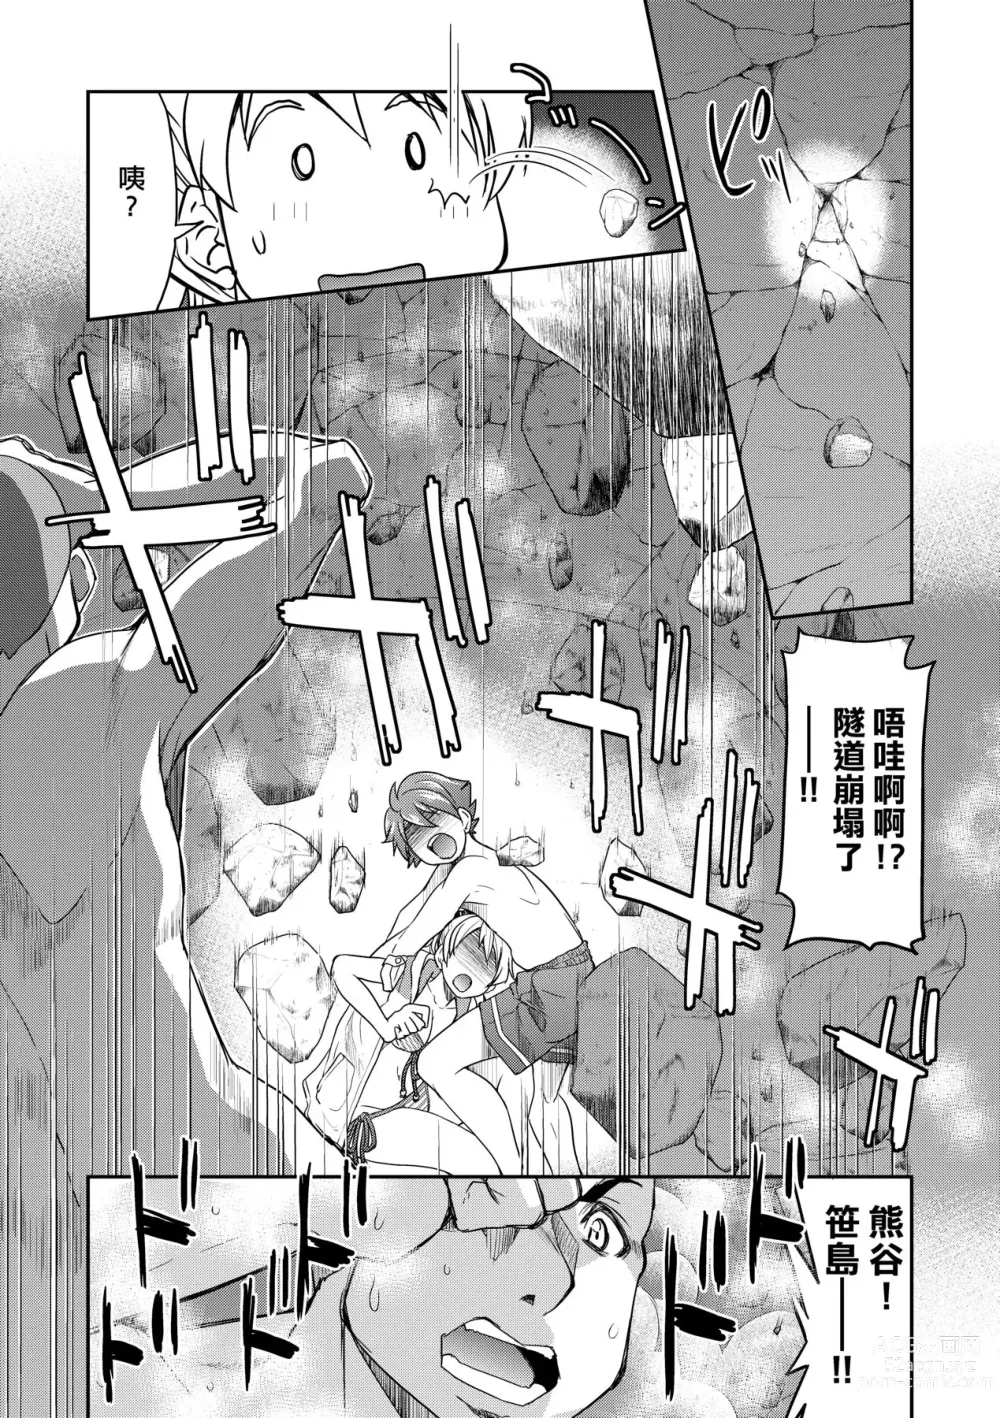 Page 219 of manga 女忍者淫縛大戰 (decensored)